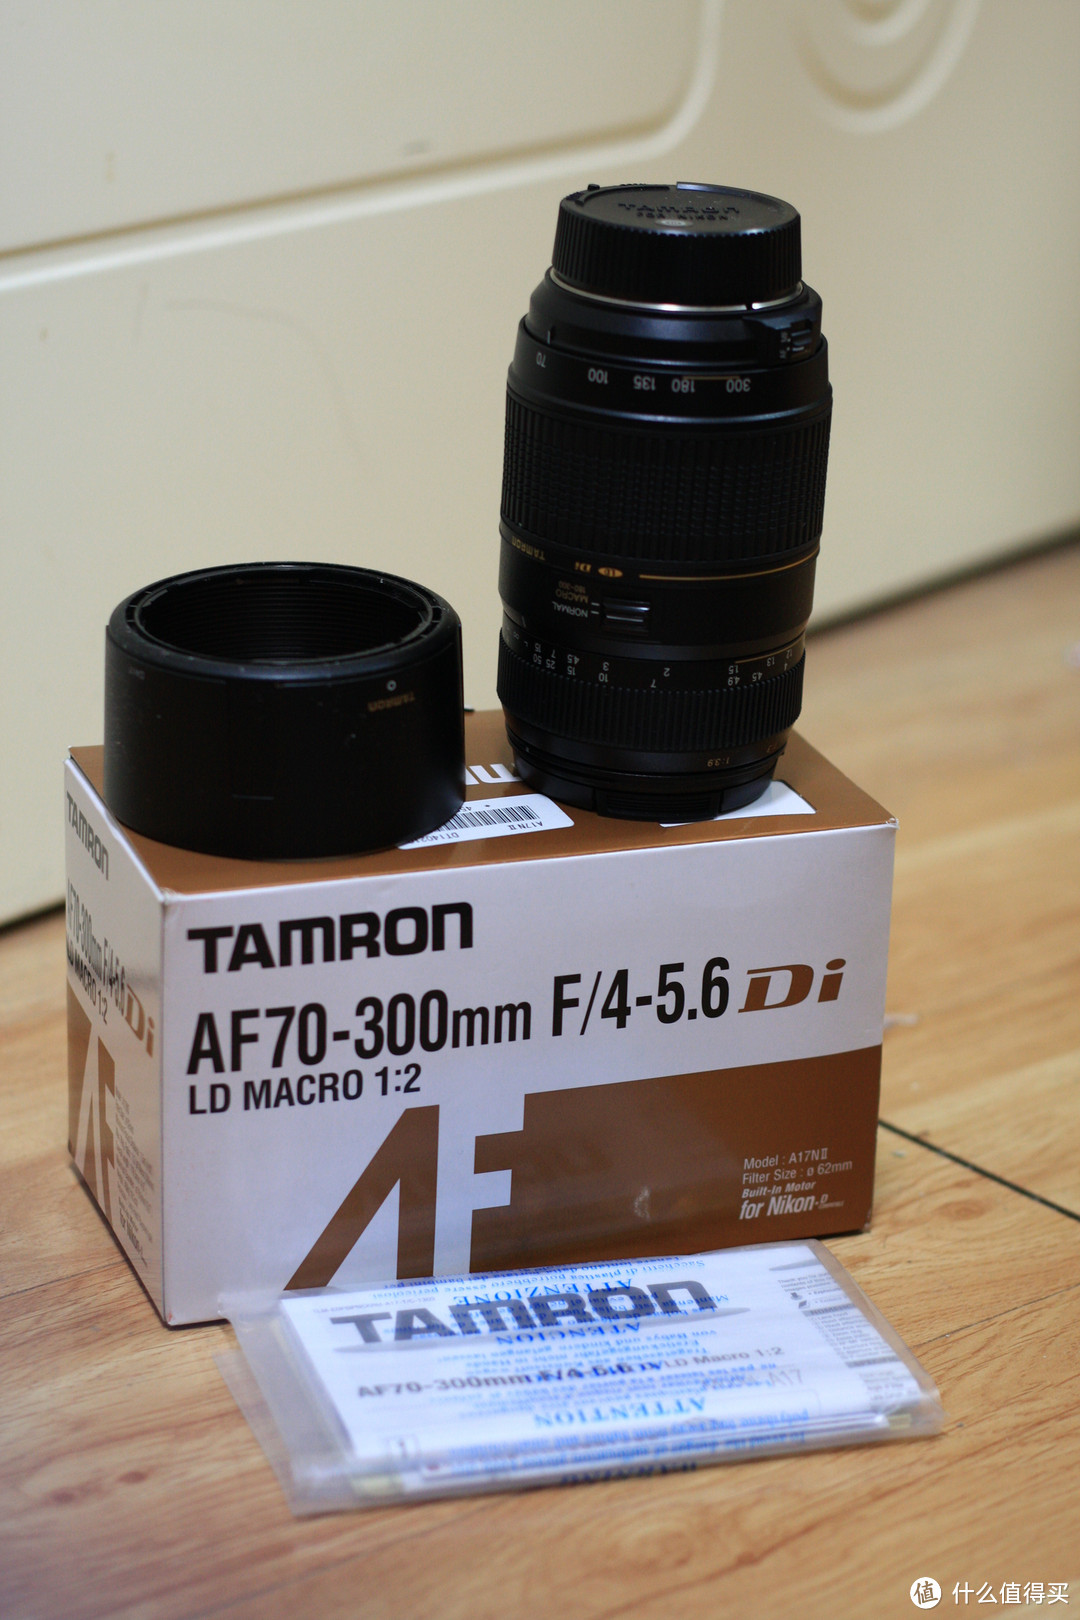 TAMRON 腾龙 AF70-300mm F/4-5.6 Di LD MACRO 1:2 远摄变焦镜头首晒附简单对比及初步体会